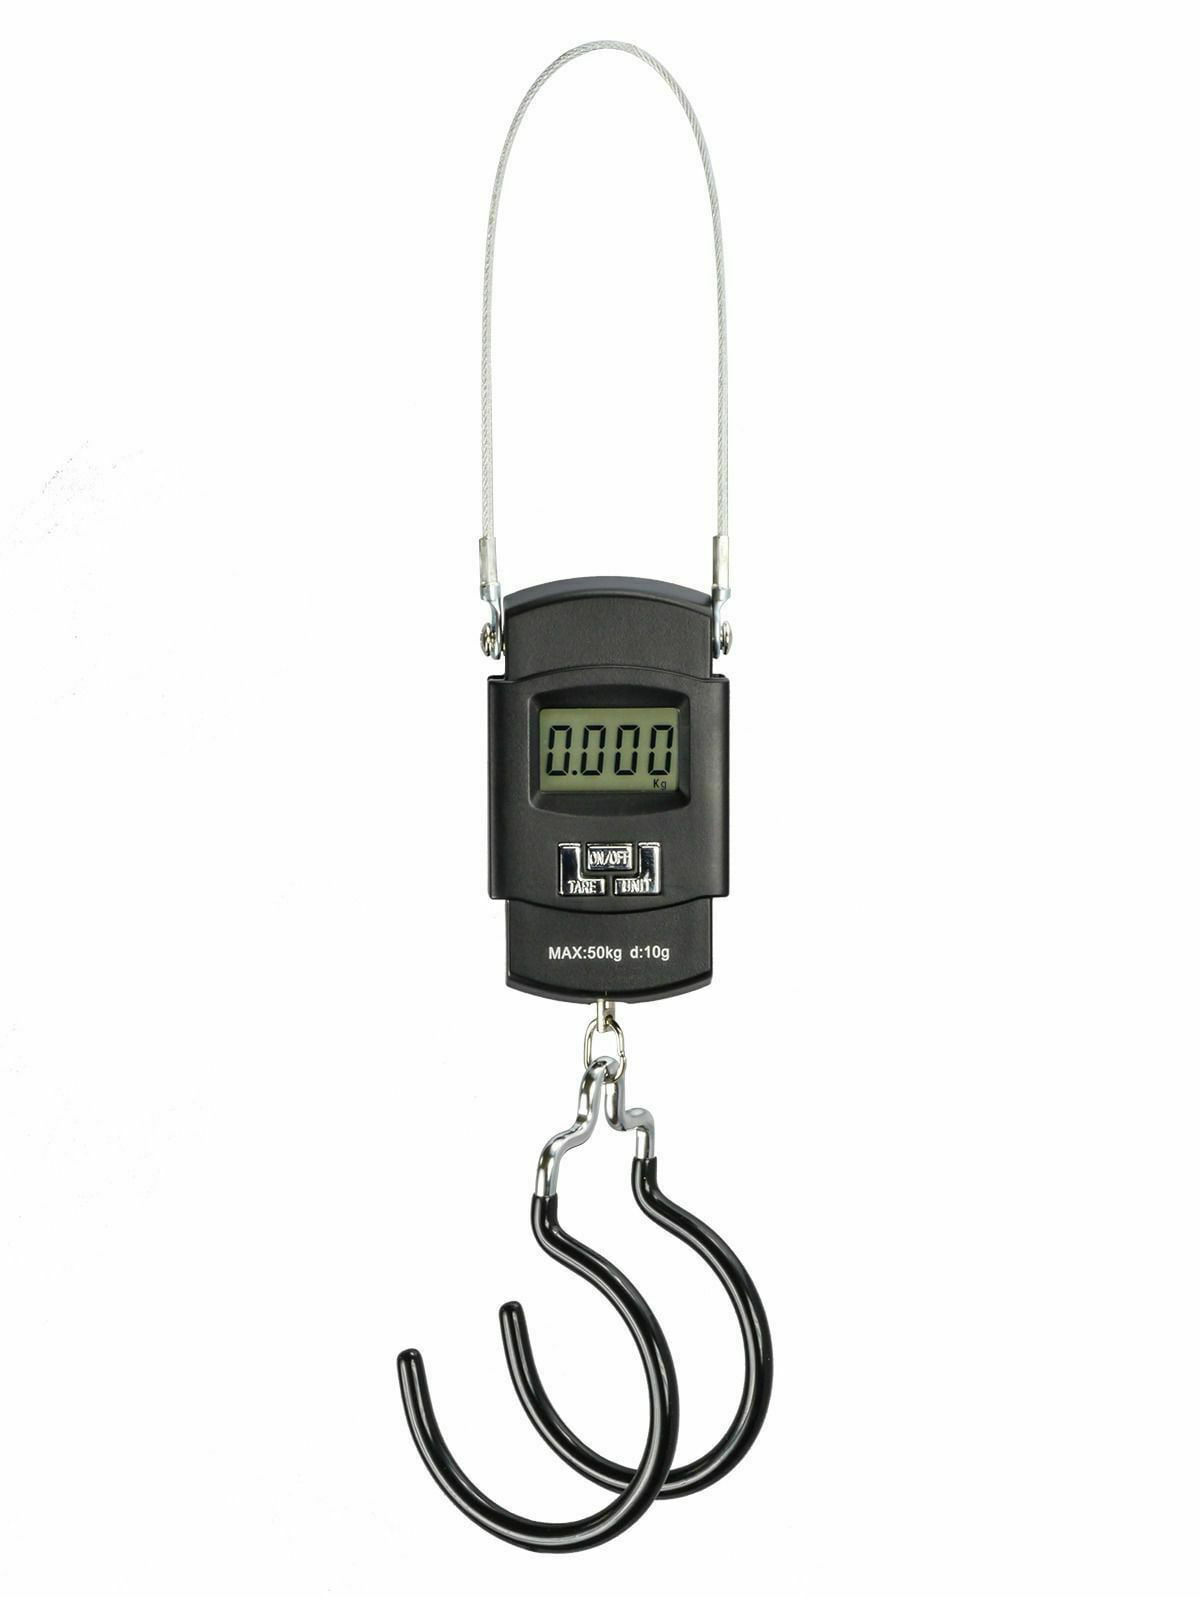 Venzo Backlit LCD Display Bike Digital Balance Hanging Hook Scale 50kg 